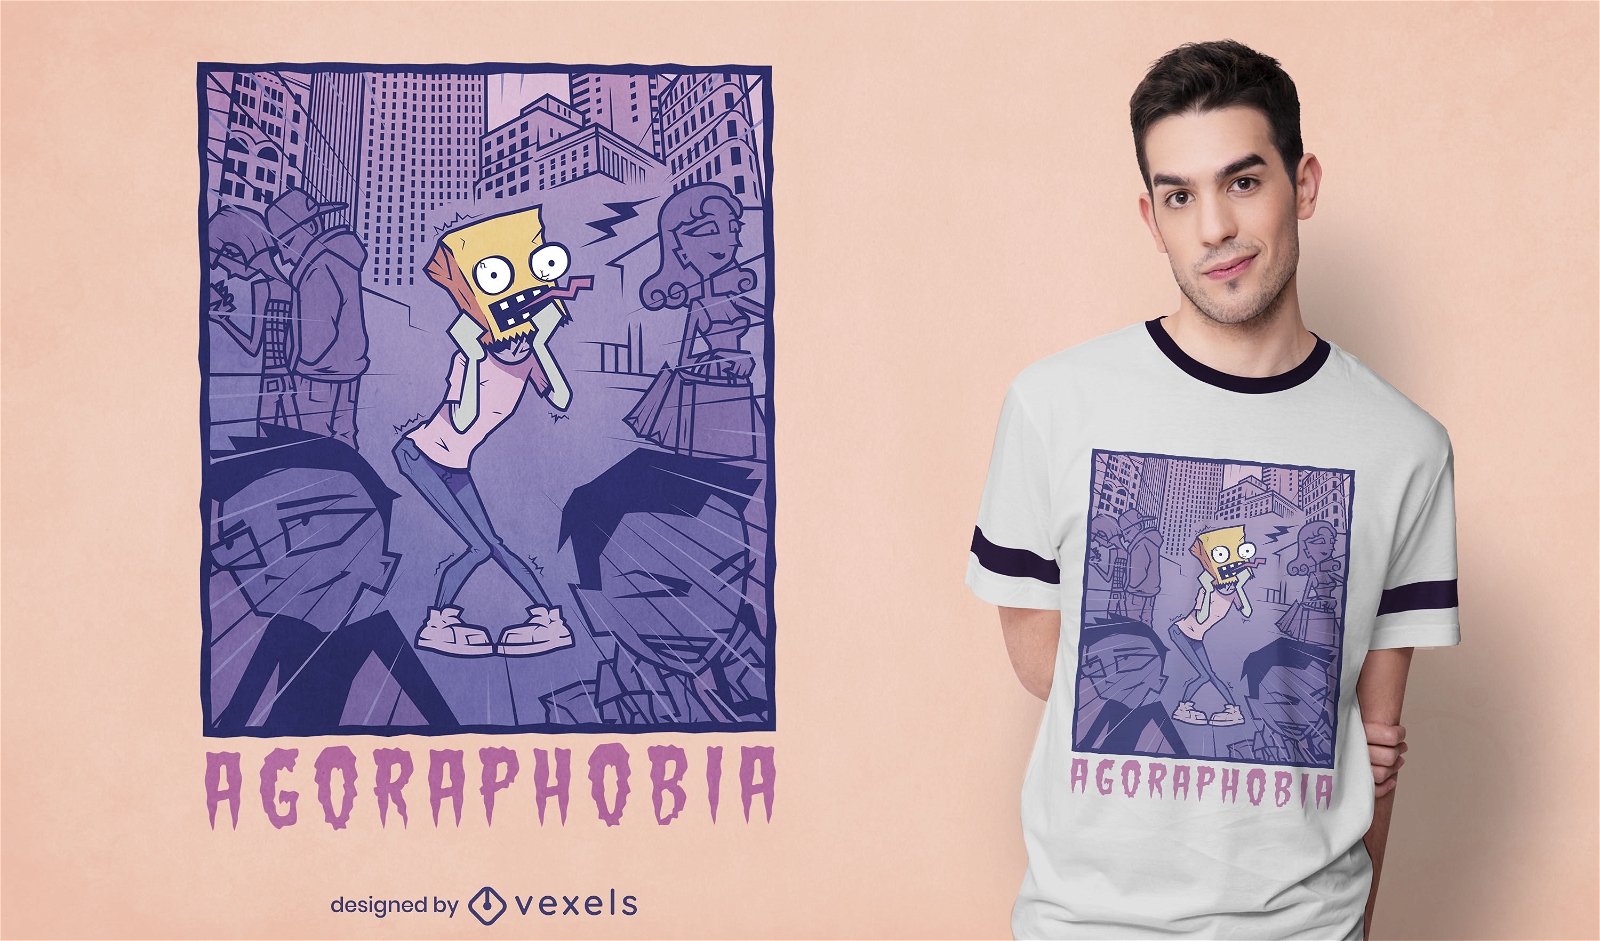 Incredible agoraphobia t-shirt design